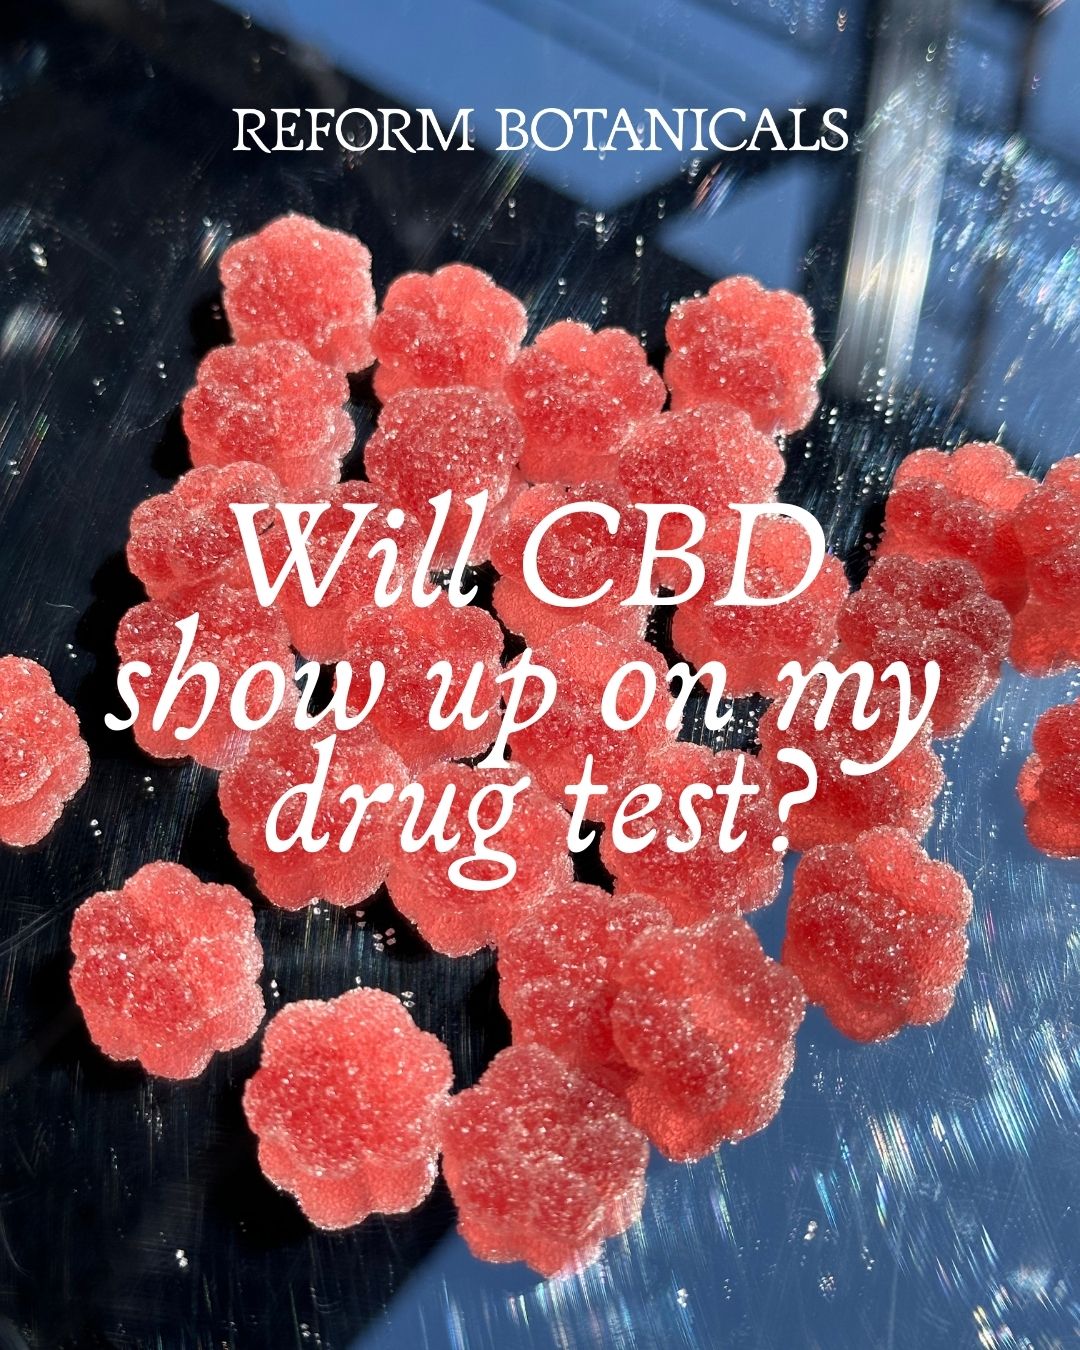 Will CBD show up on my drug test?